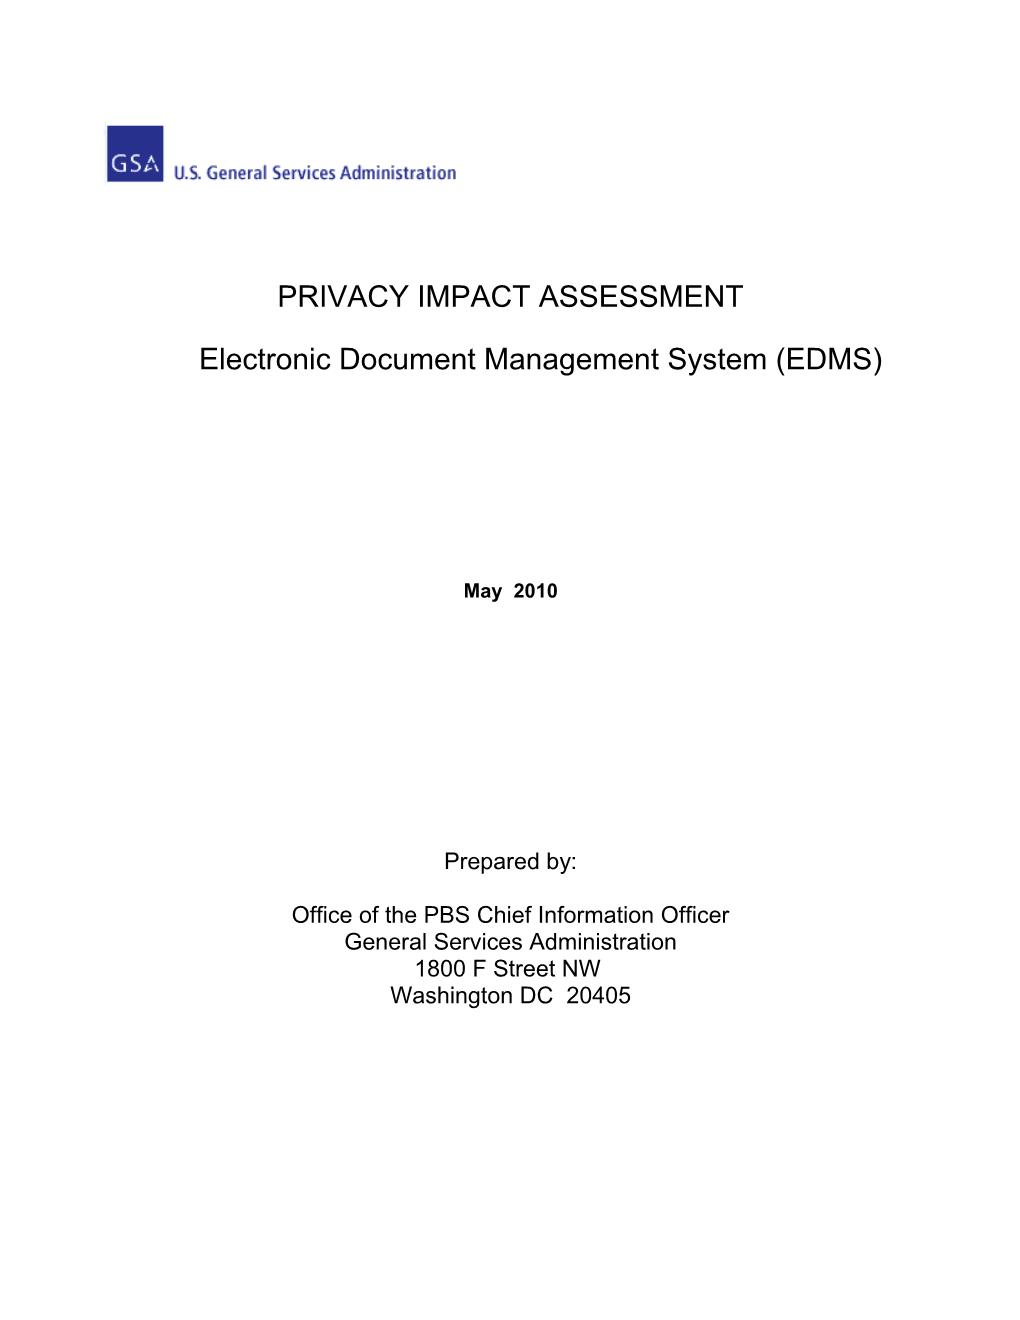 Electronic Document Management System (EDMS)